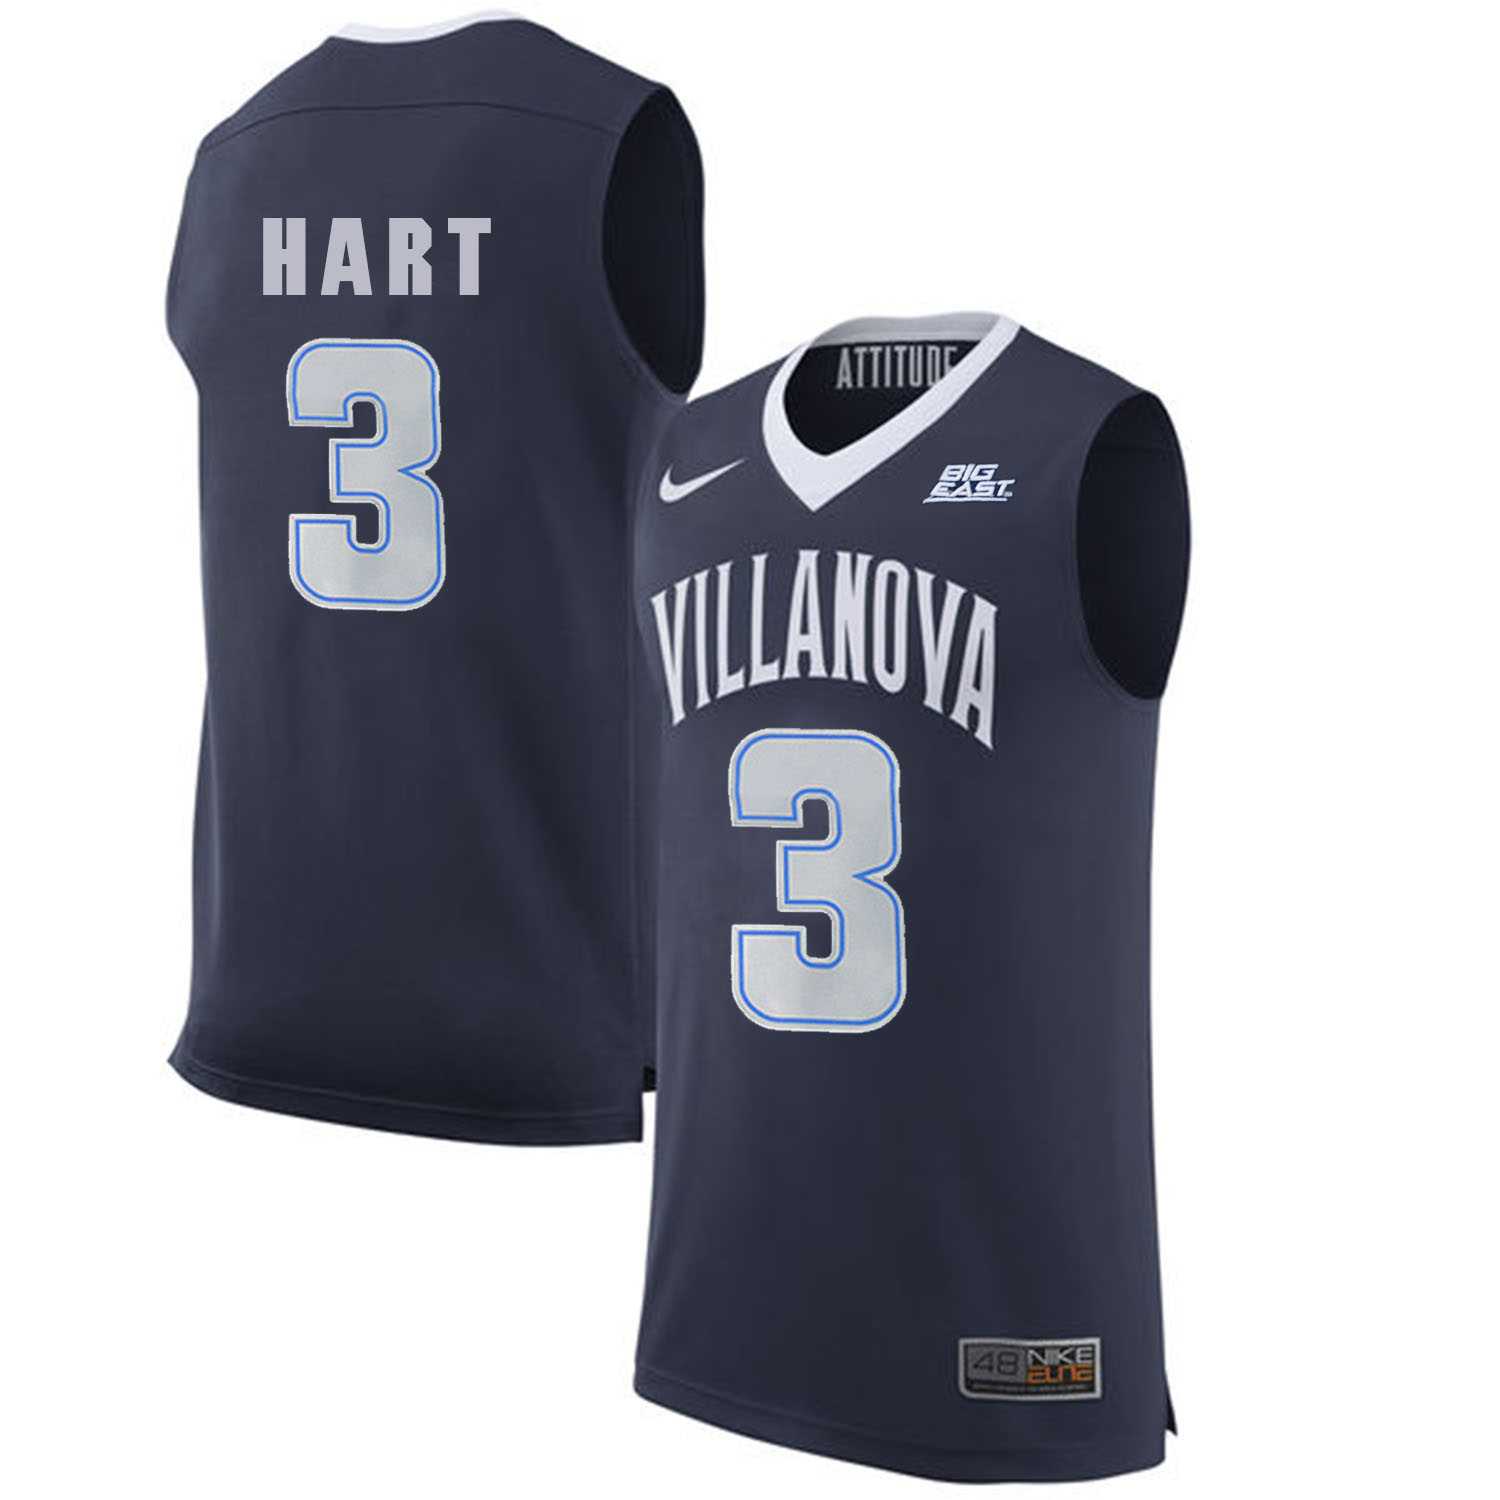 Villanova Wildcats #3 Josh Hart Navy College Basketball Elite Jersey